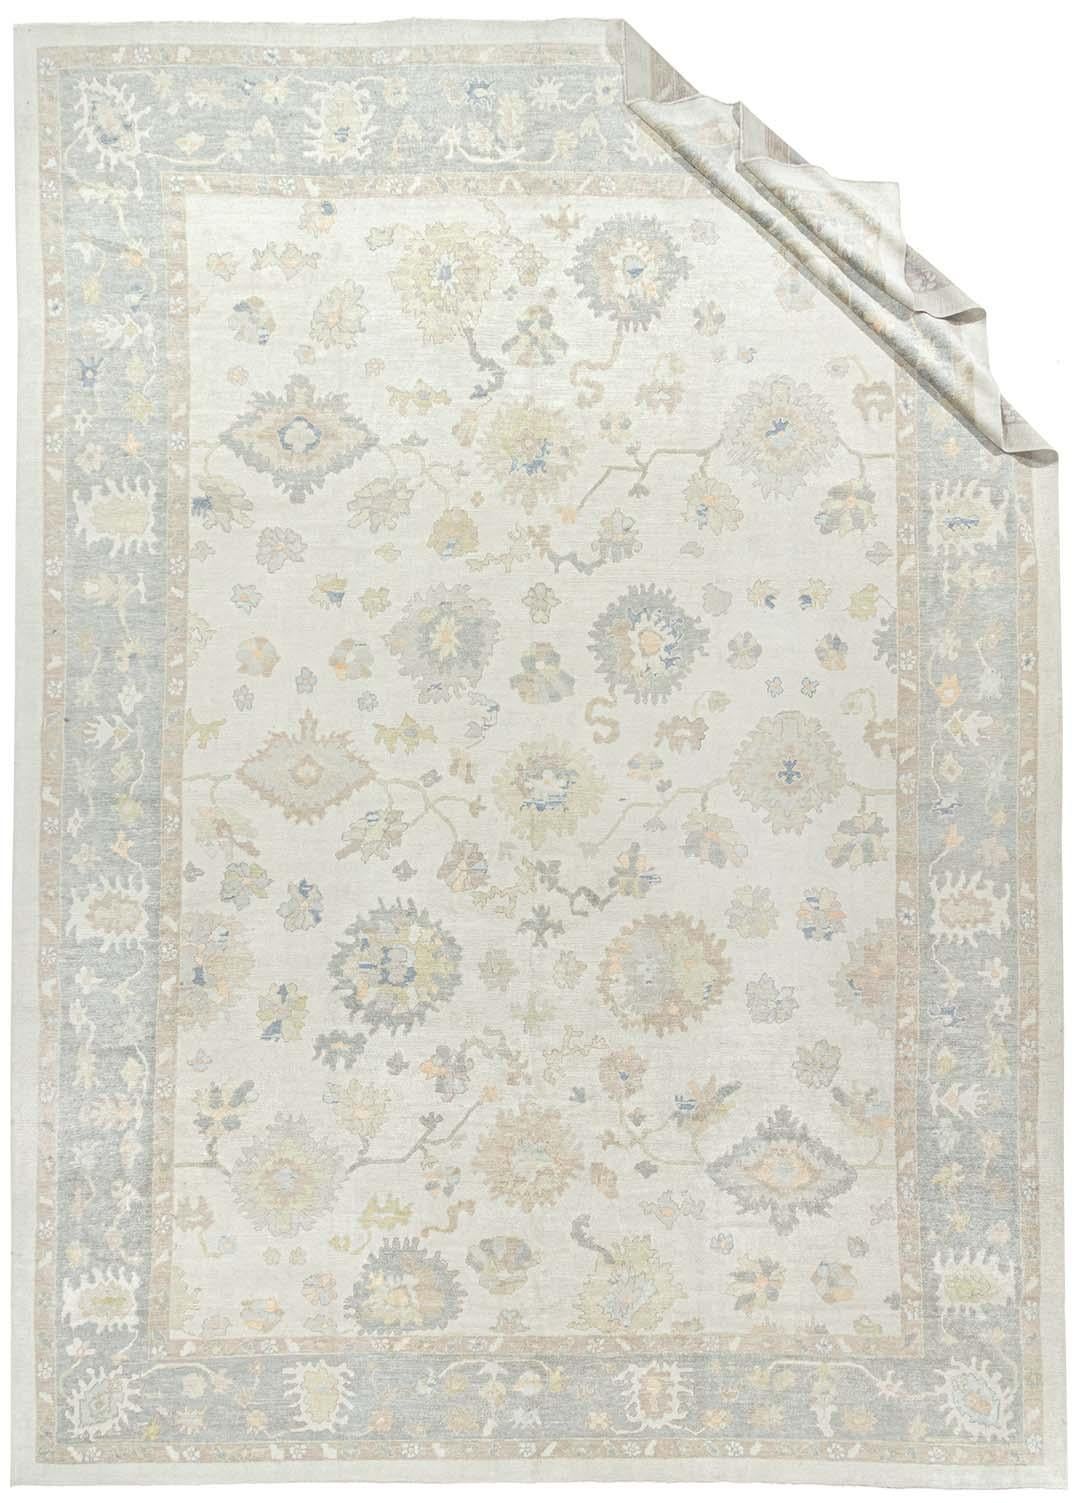 Turkish Oversize Oushak Style Handwoven Carpet Rug, 14'4 x 20'8 For Sale